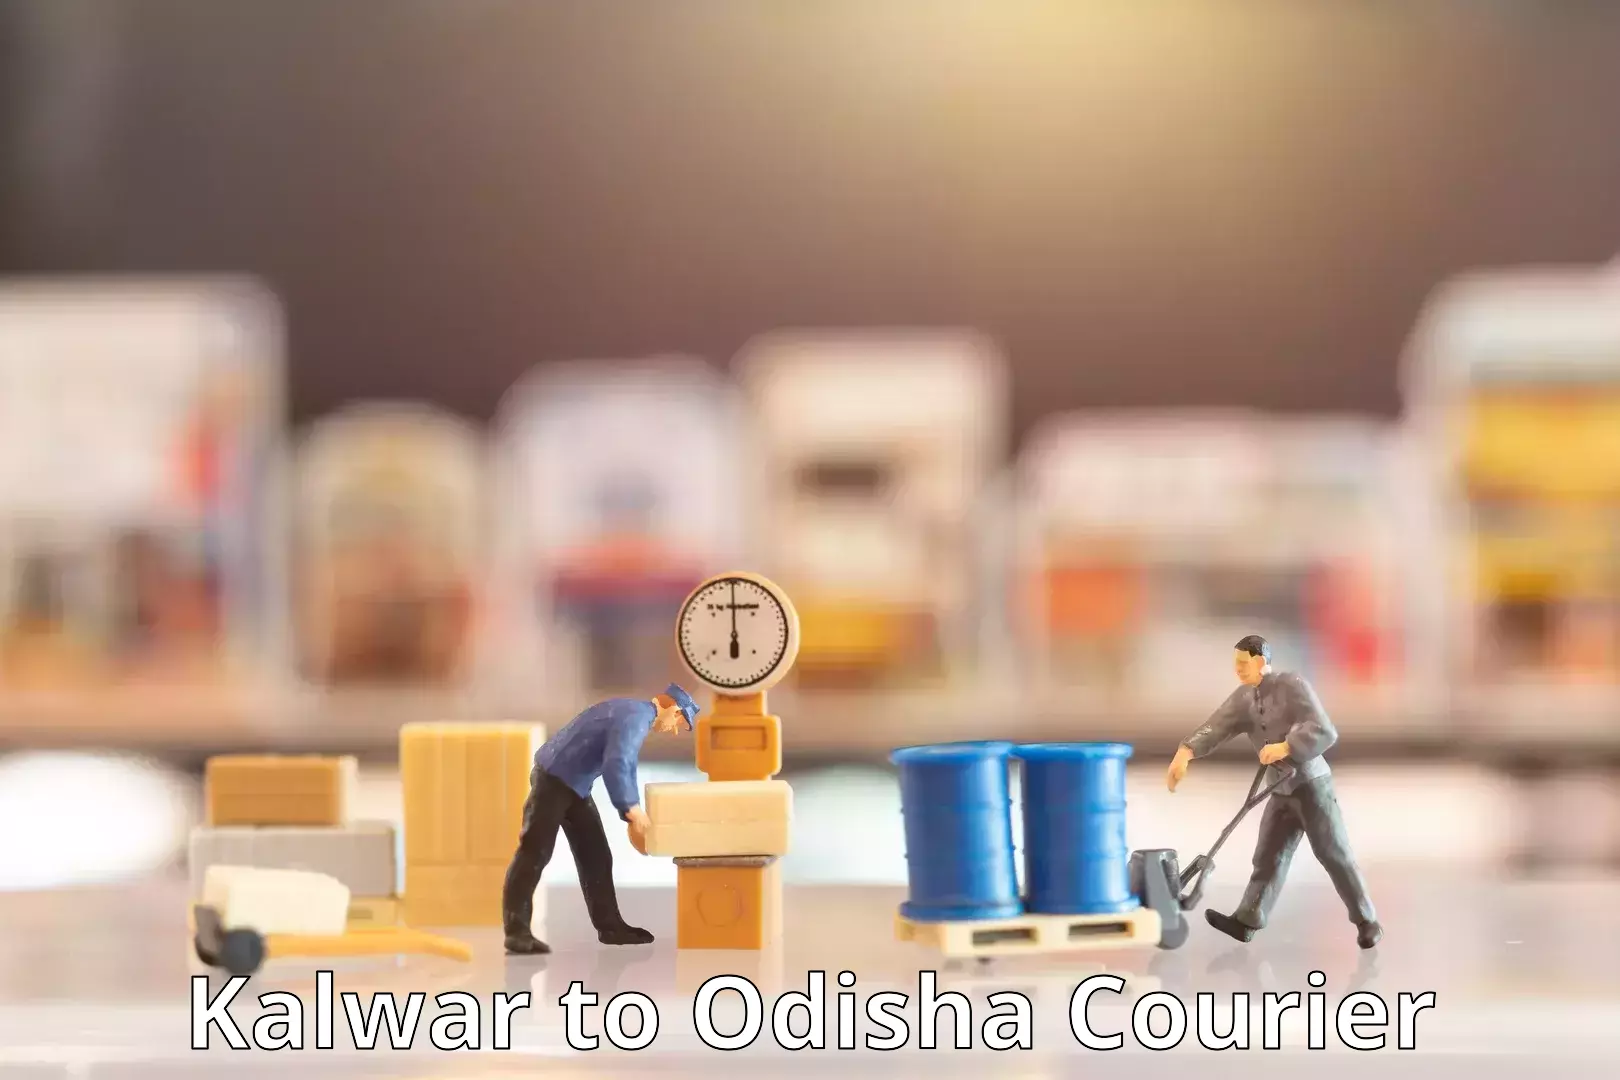 Supply chain efficiency Kalwar to Odisha